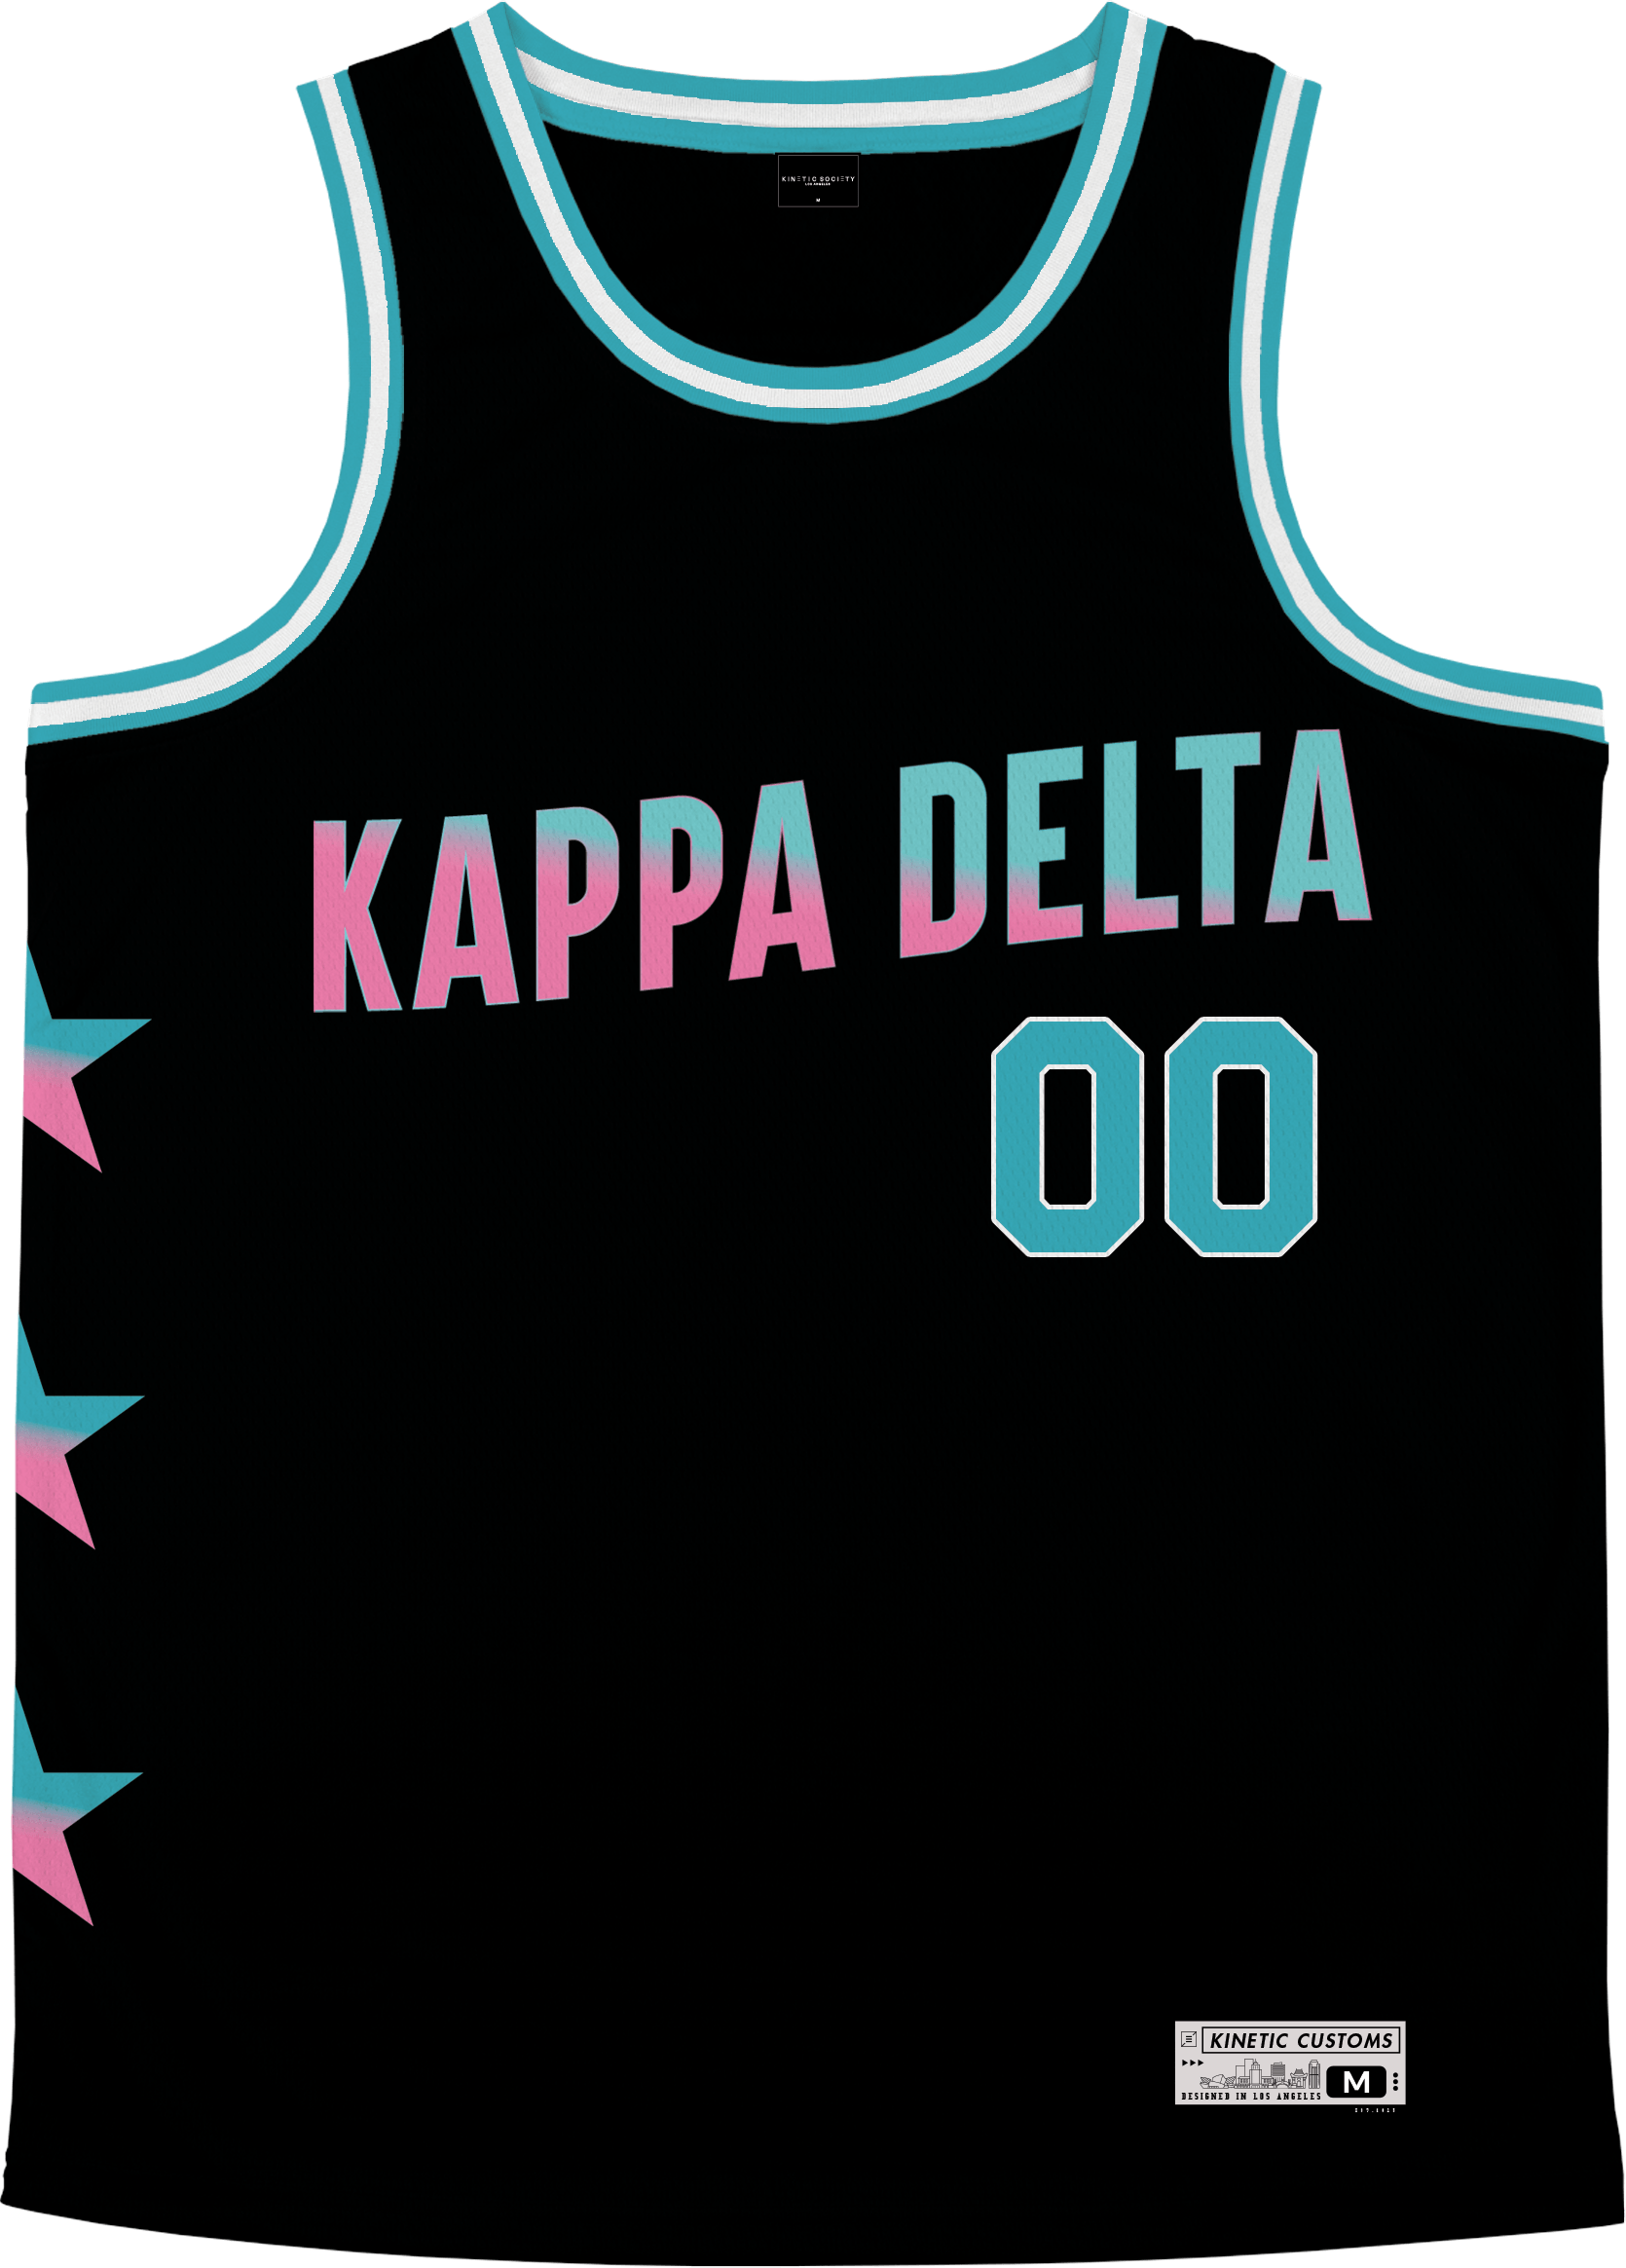 Kappa Delta - Cotton Candy Basketball Jersey Premium Basketball Kinetic Society LLC 